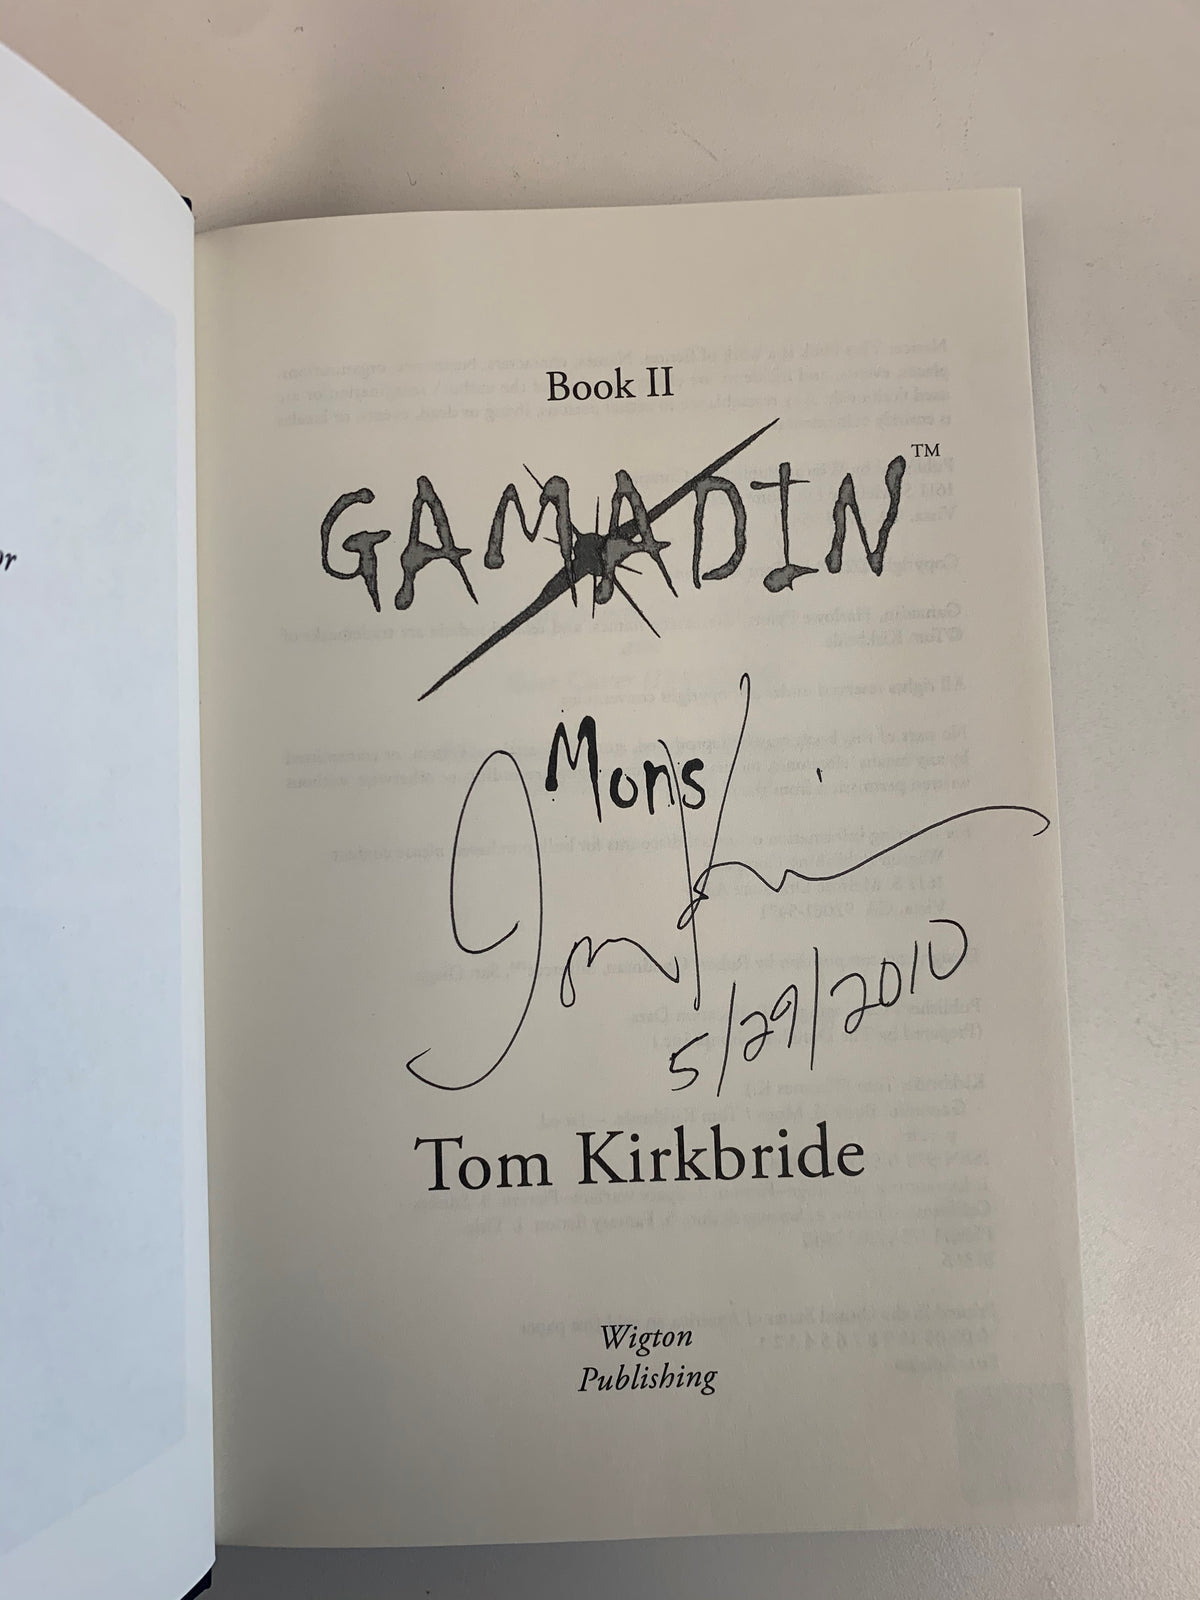 Gamadin Mons Tom Kirkbride signed first edition book